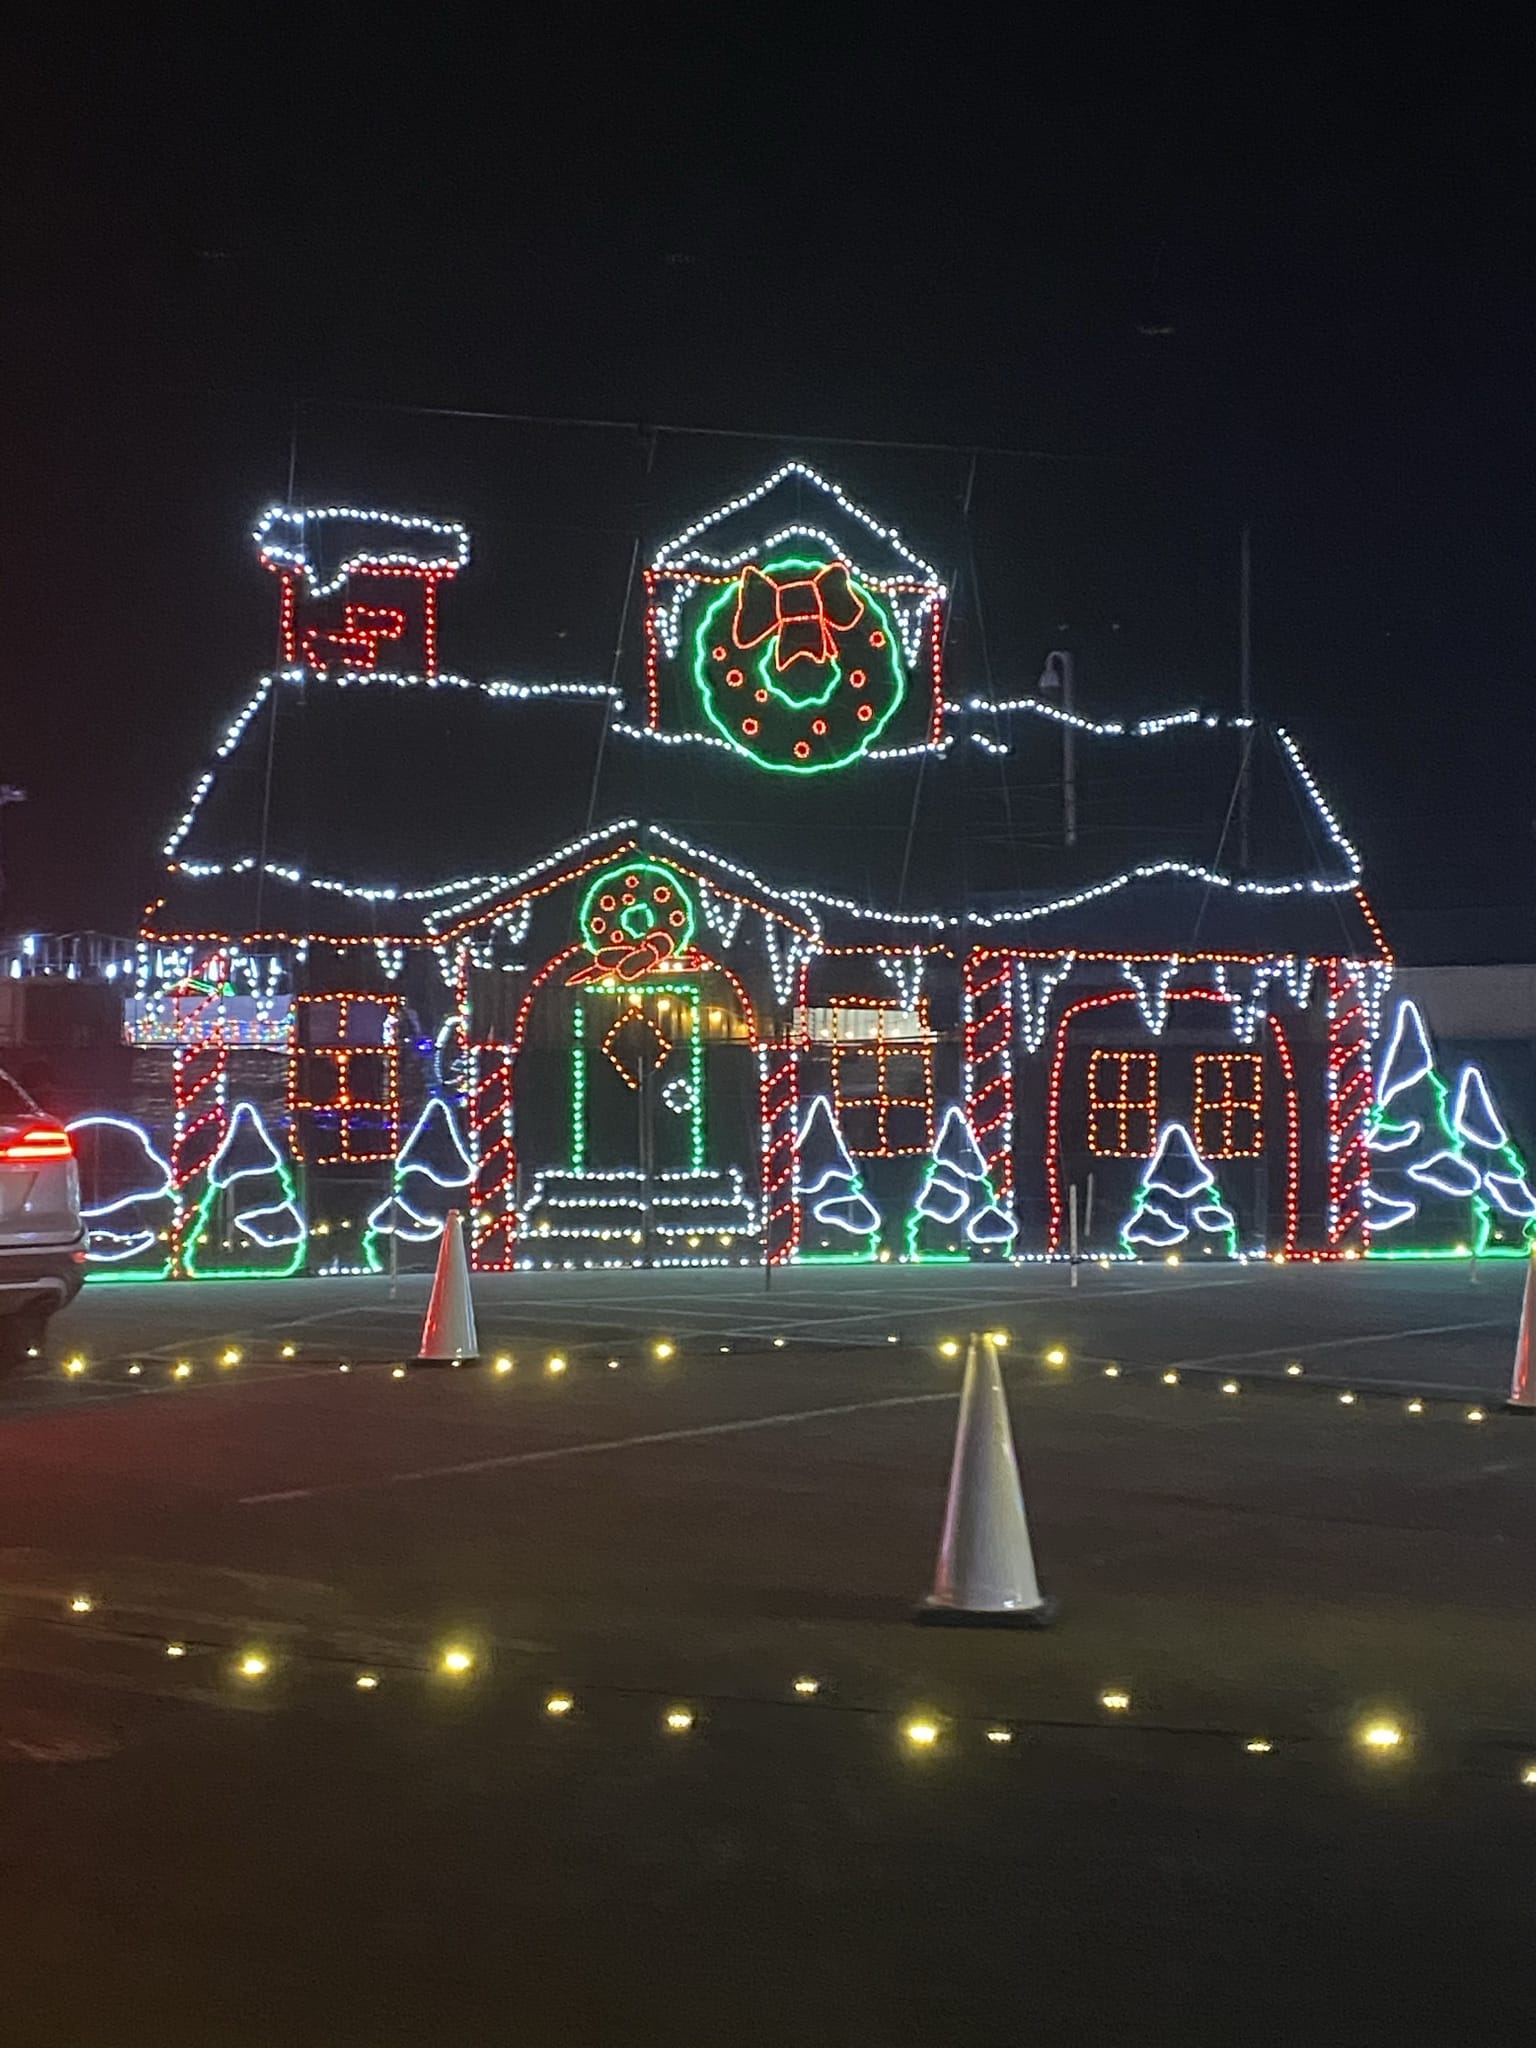 Santa's workshop Christmas lights display